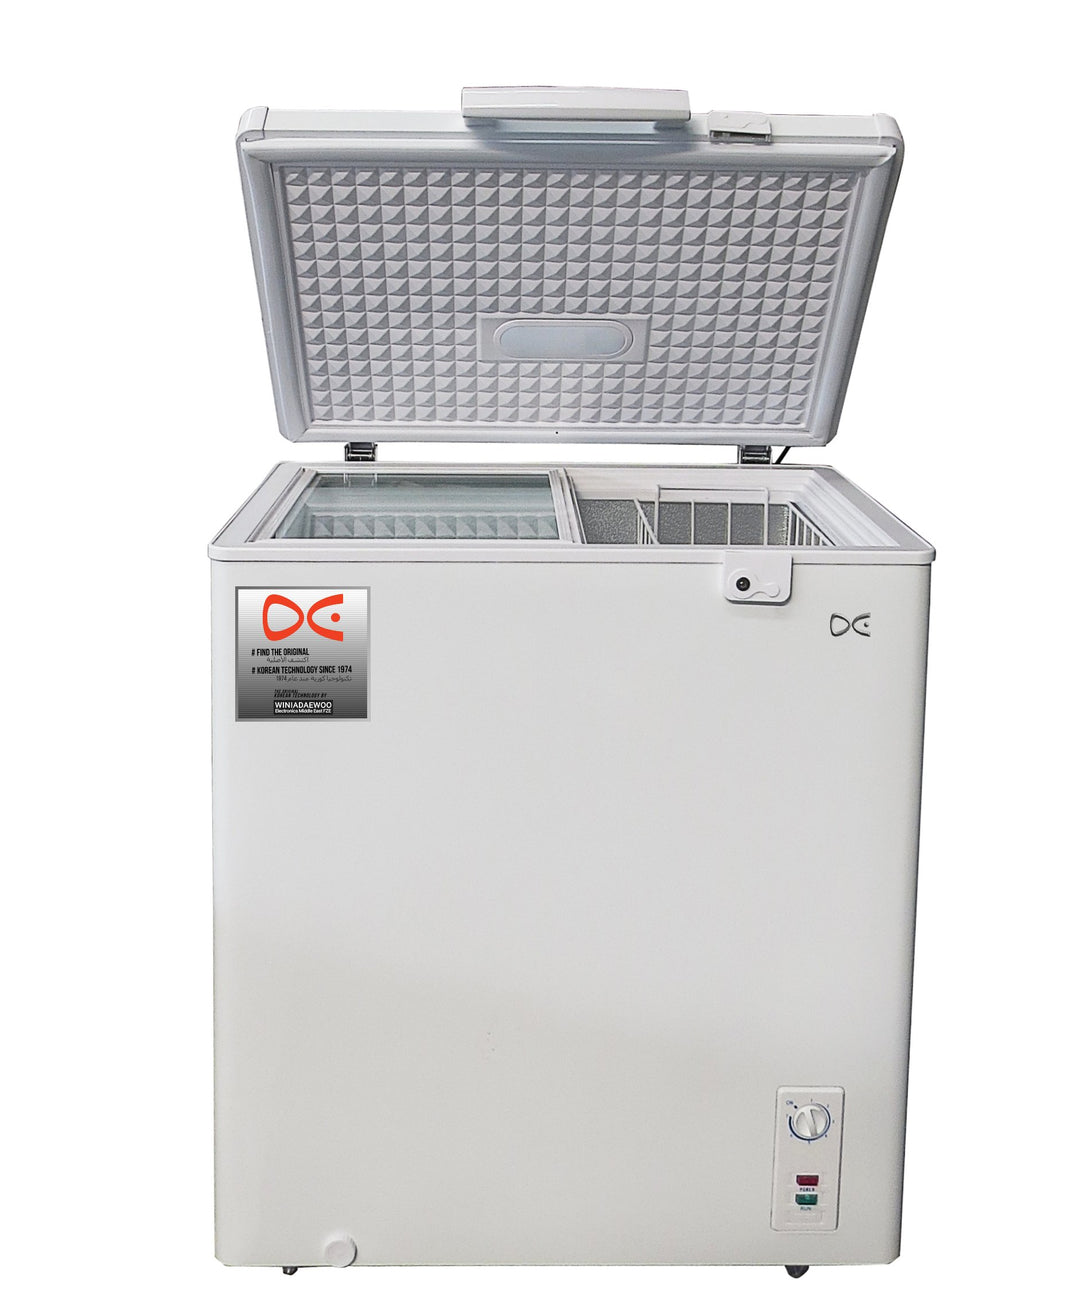 Daewoo 220 Liters White Chest Freezer | WCFW22WMCL | Home Appliances | Chest Freezer, Freezers, Home Appliances, Major Appliances |Image 1